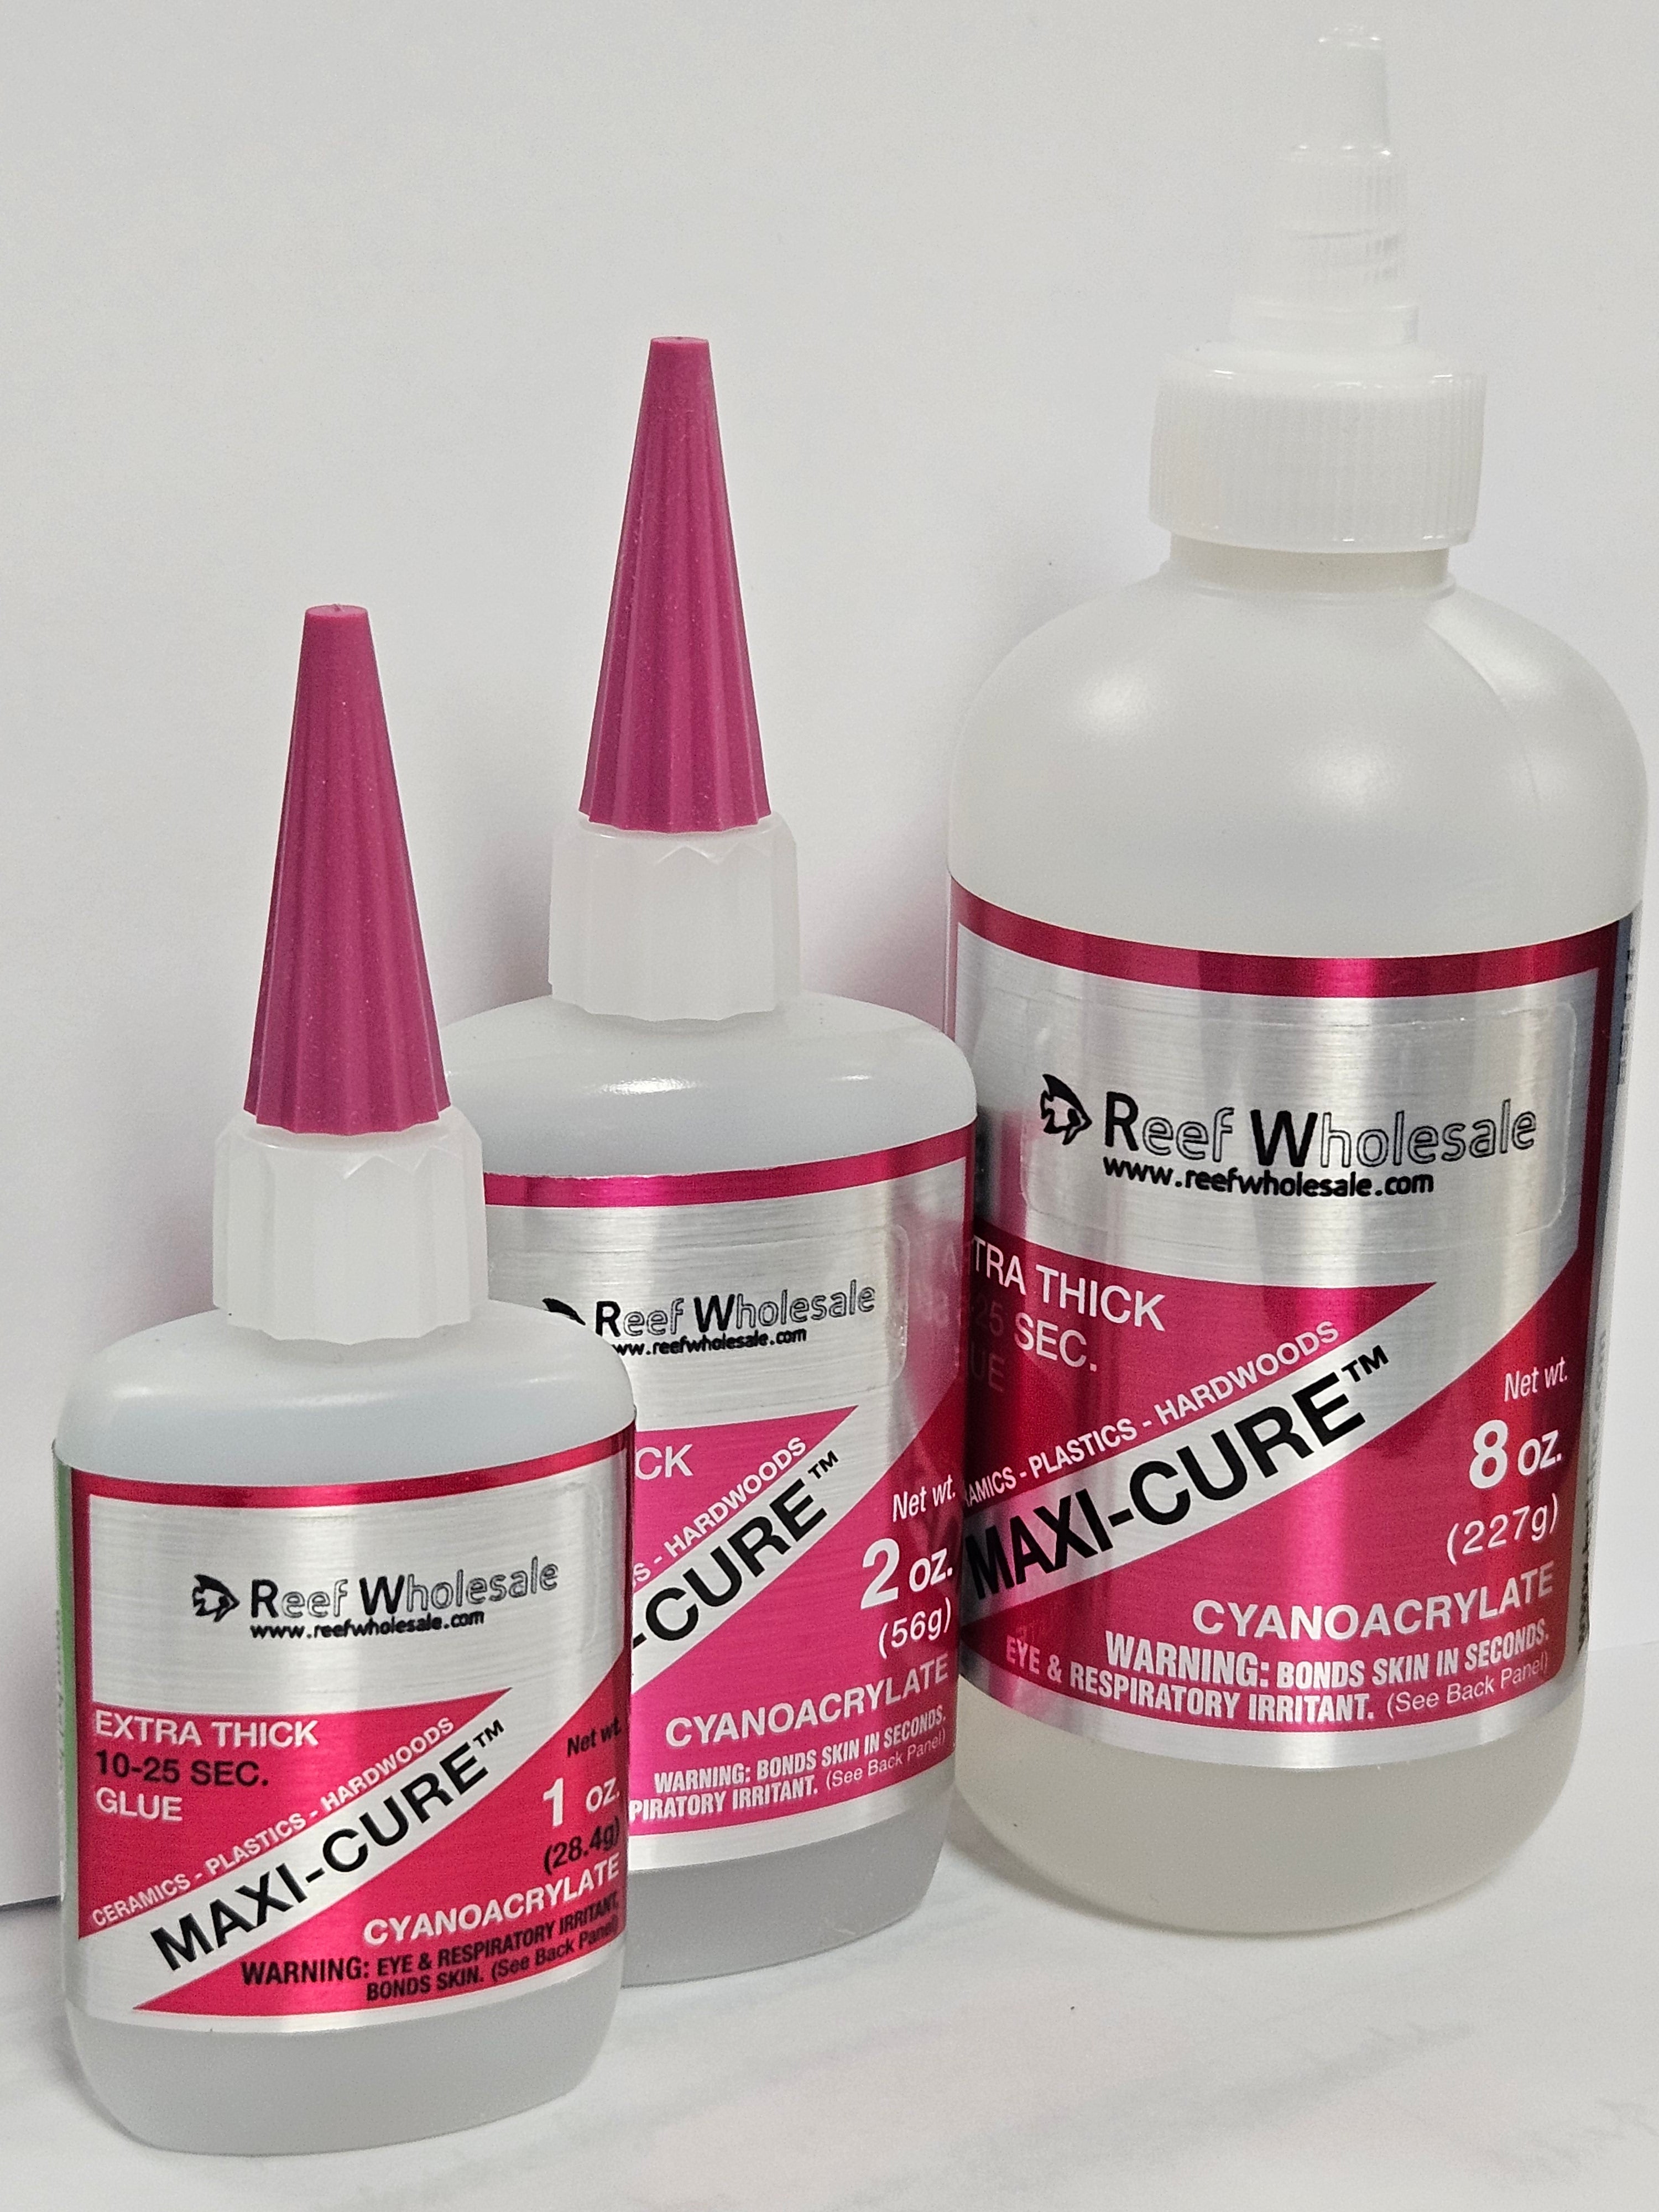 Maxi-Cure Extra Thick Cyanoacrylate